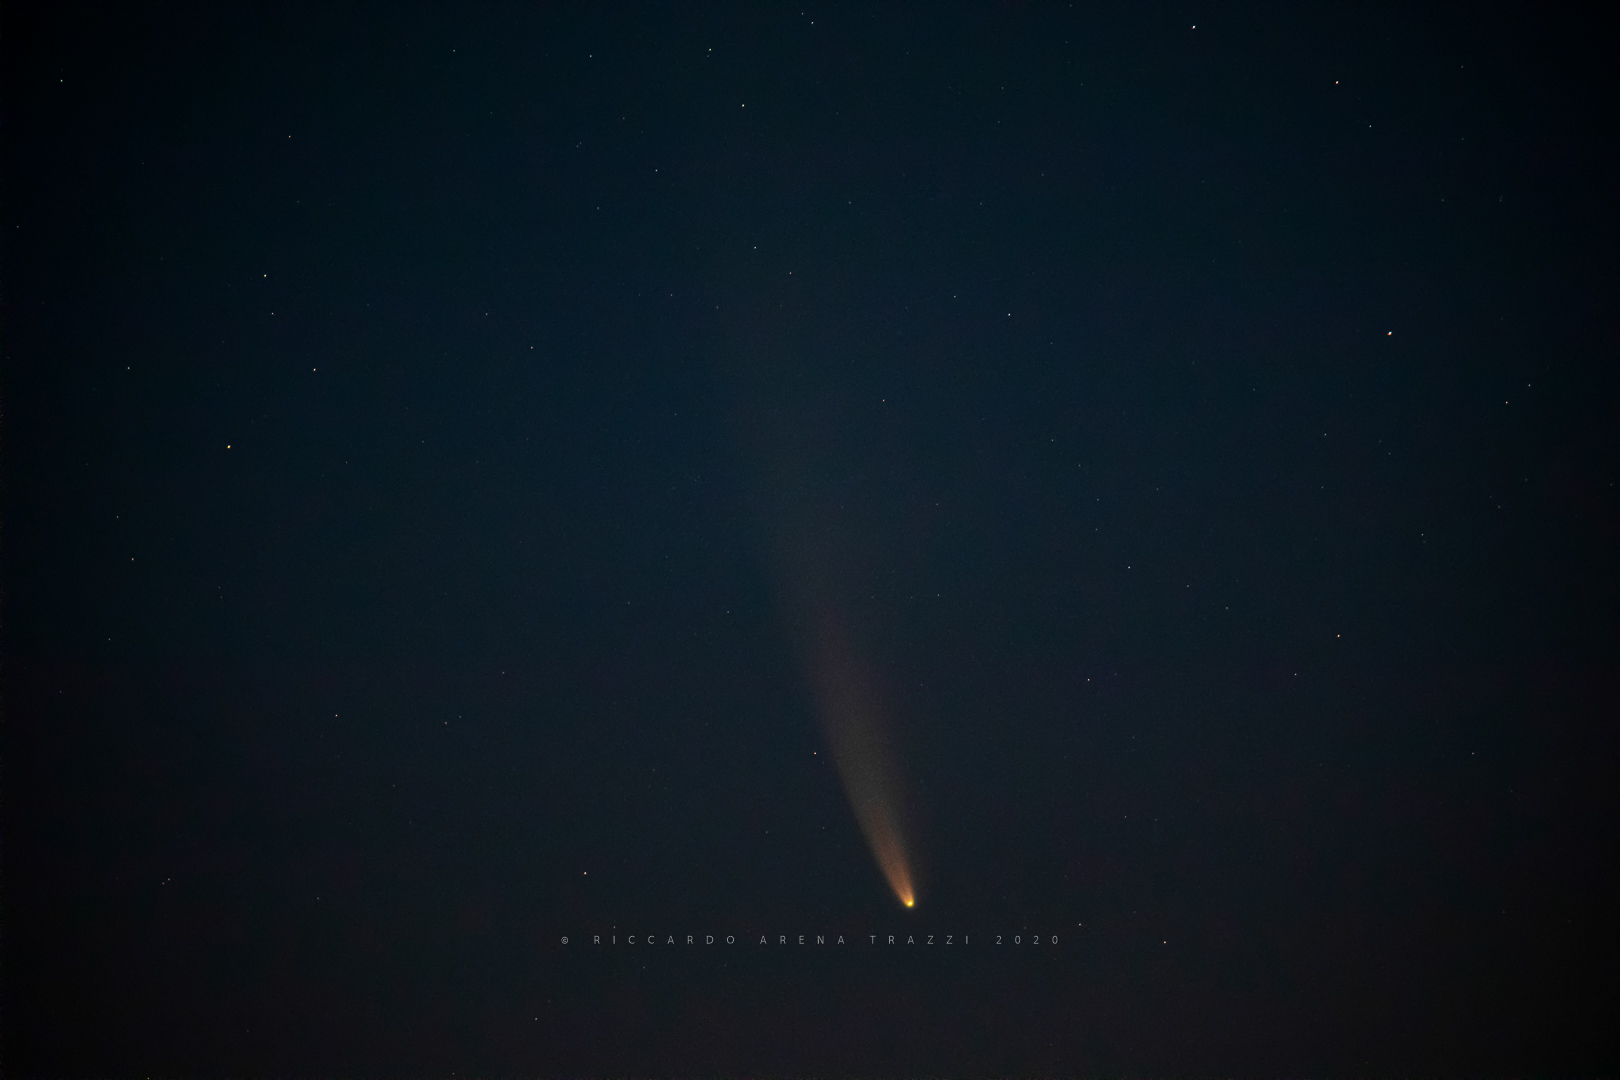 Cometa Neowise c/2020 f3...